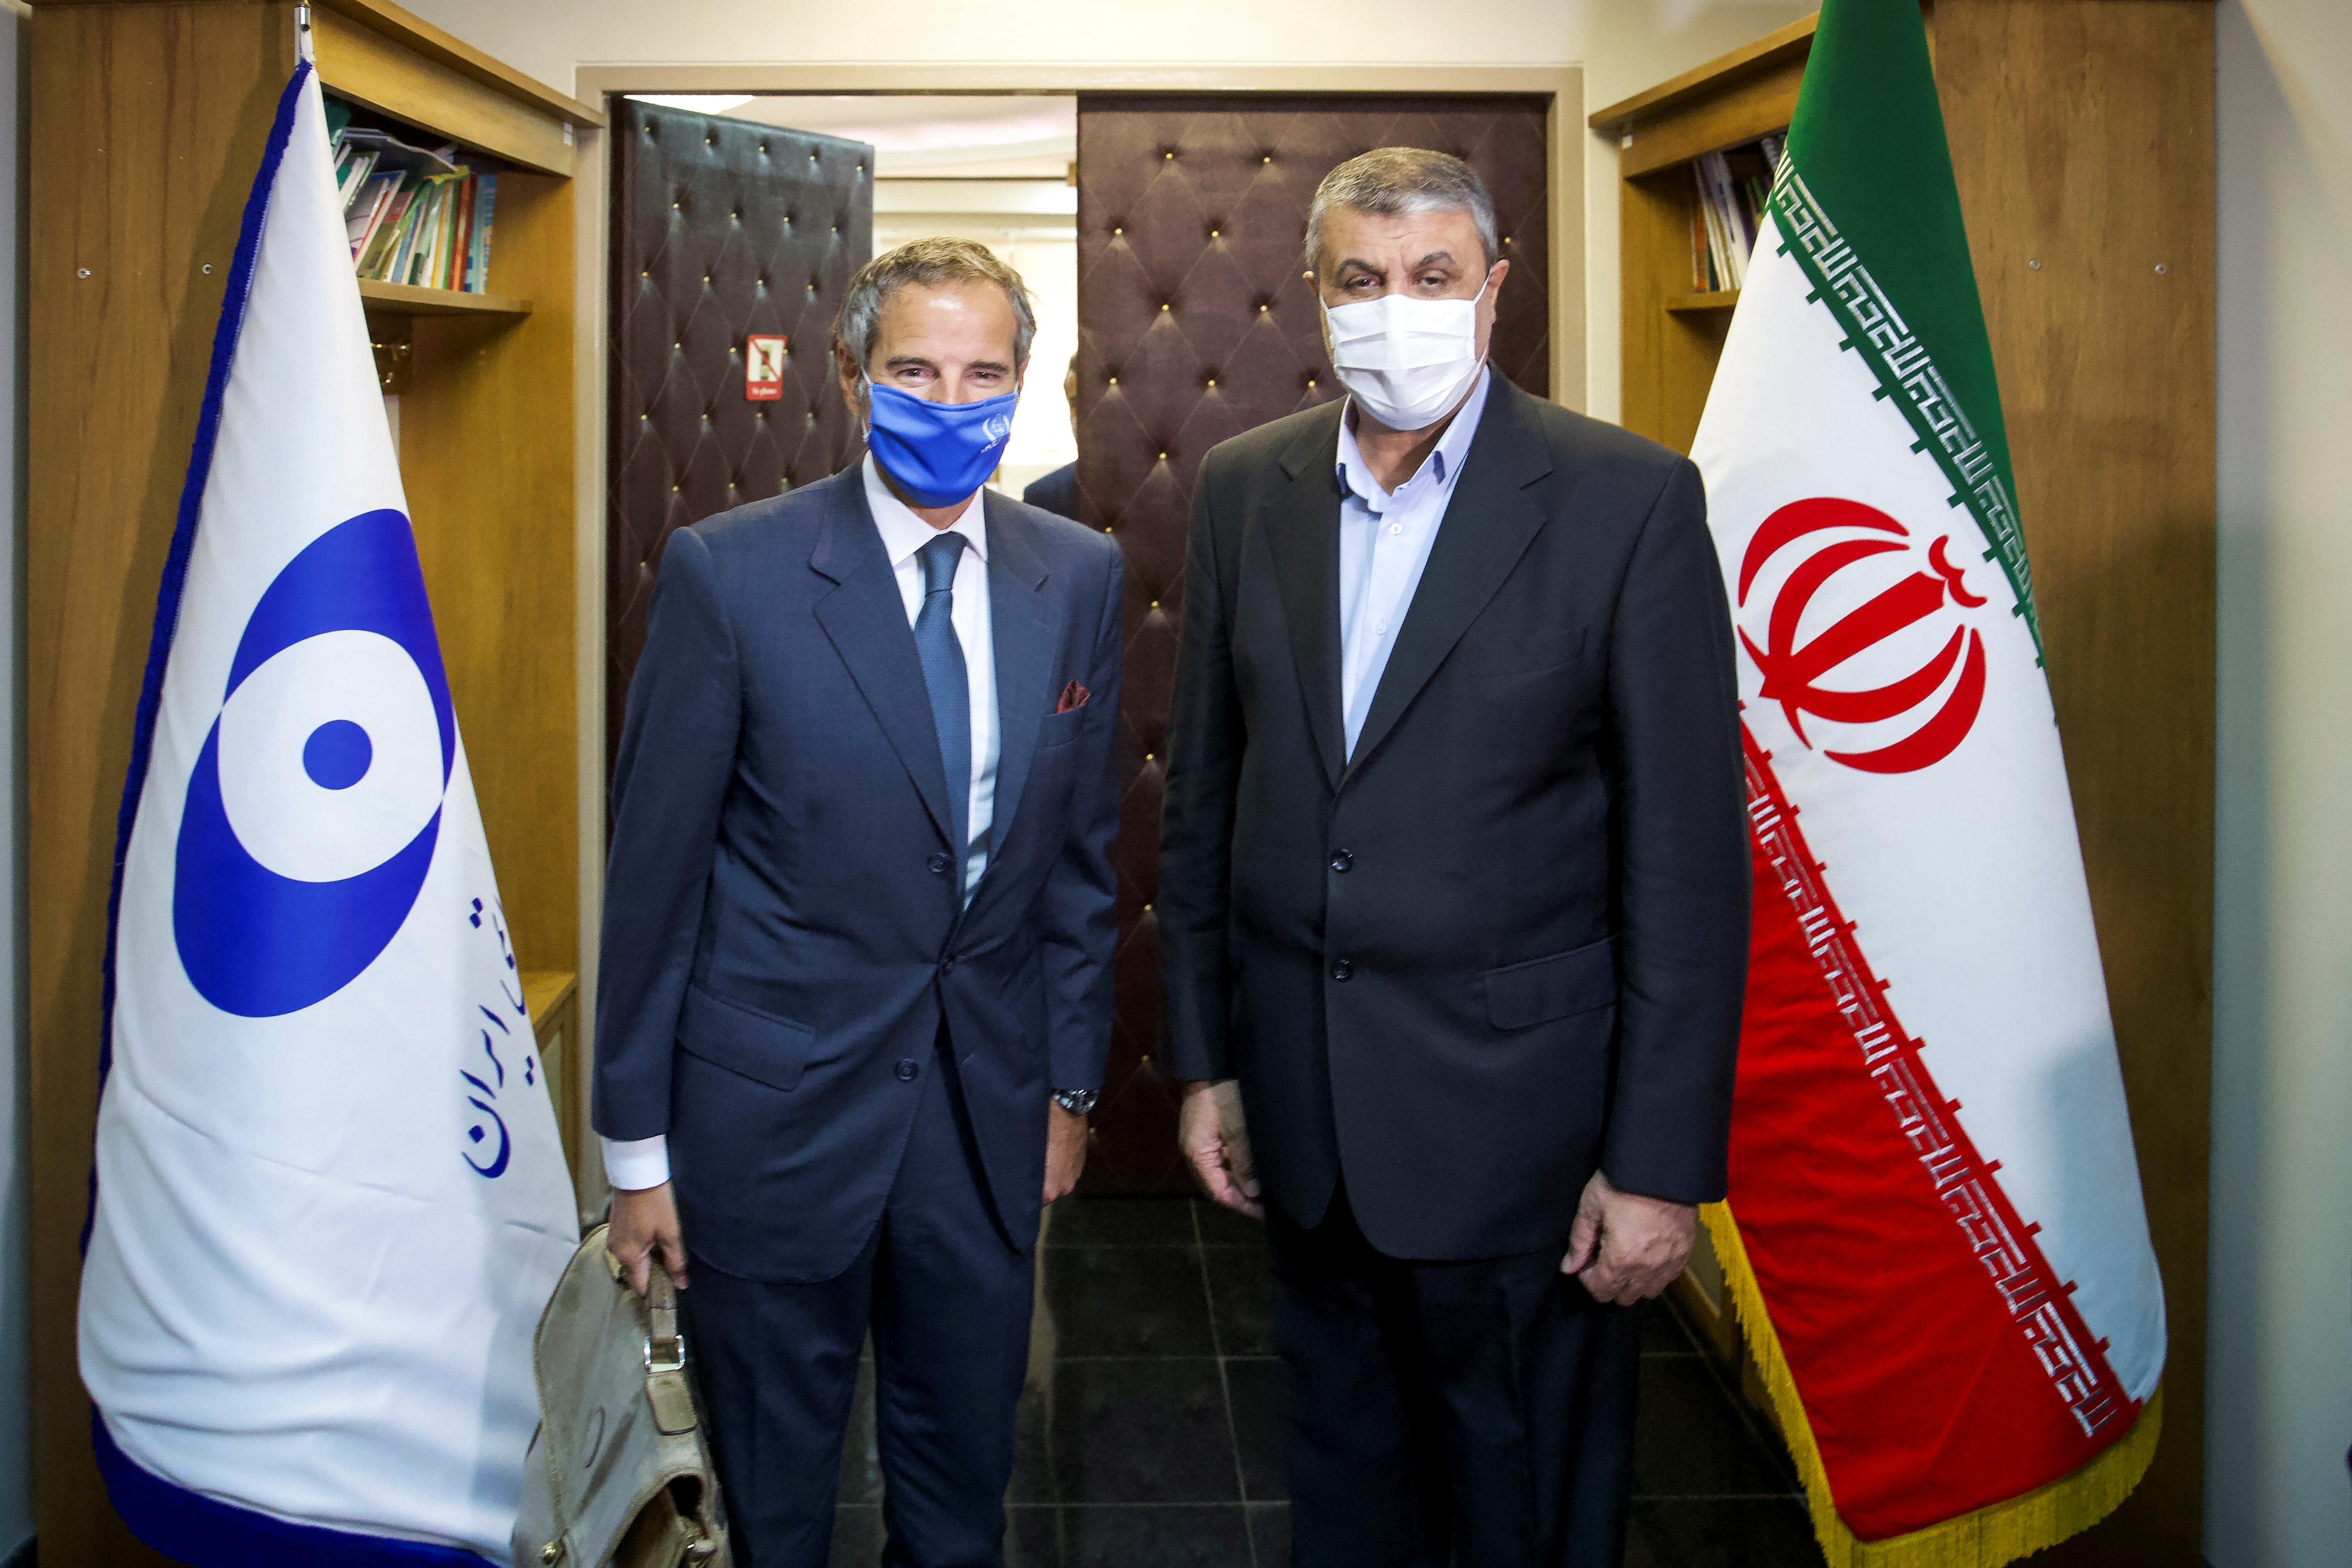 IAEA Director General Grossi meets with head of Iran's Atomic Energy Organization Eslami, in Tehran